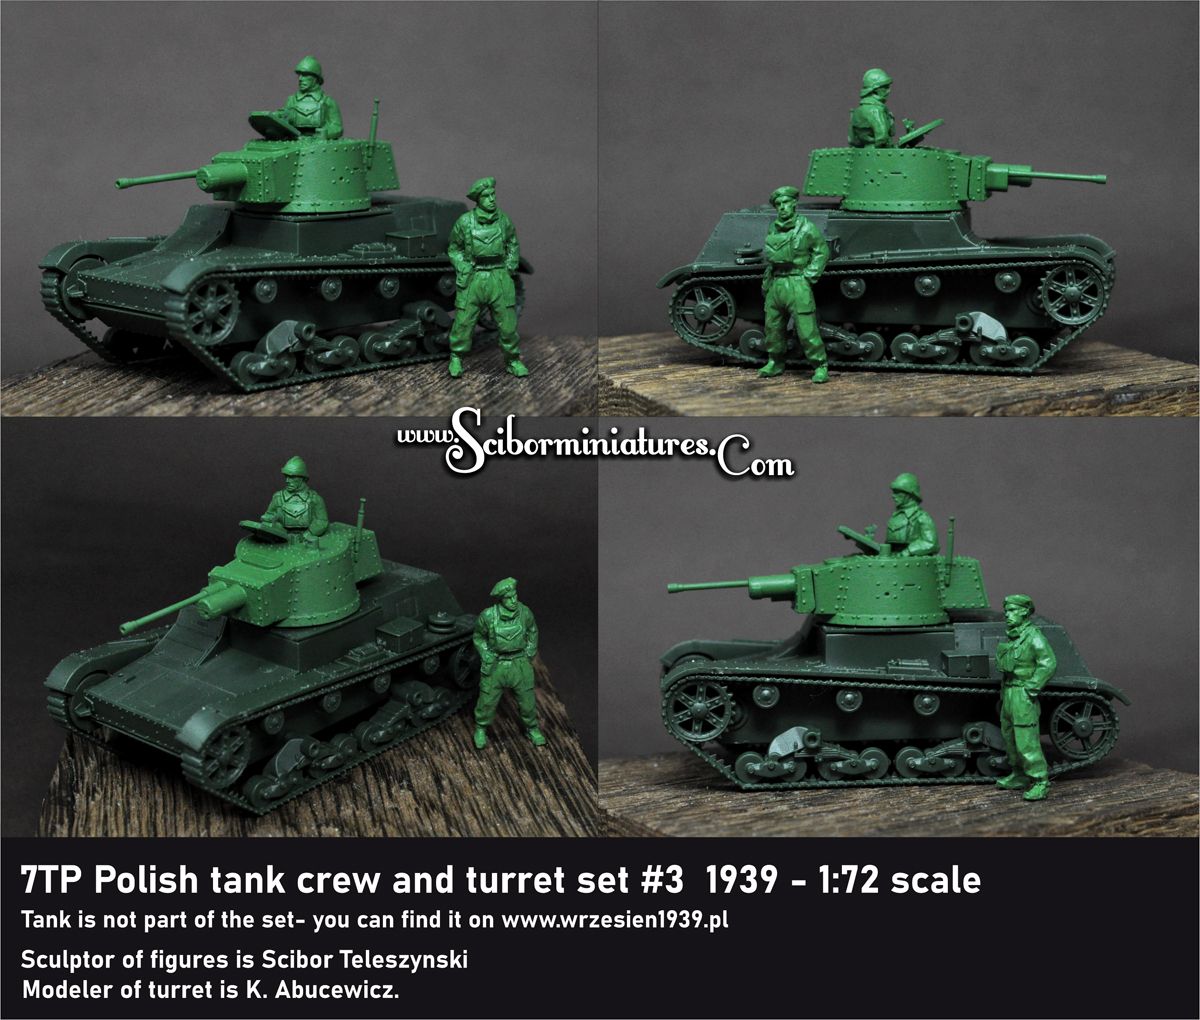 7TP tank turret & crew 1939 - set 3